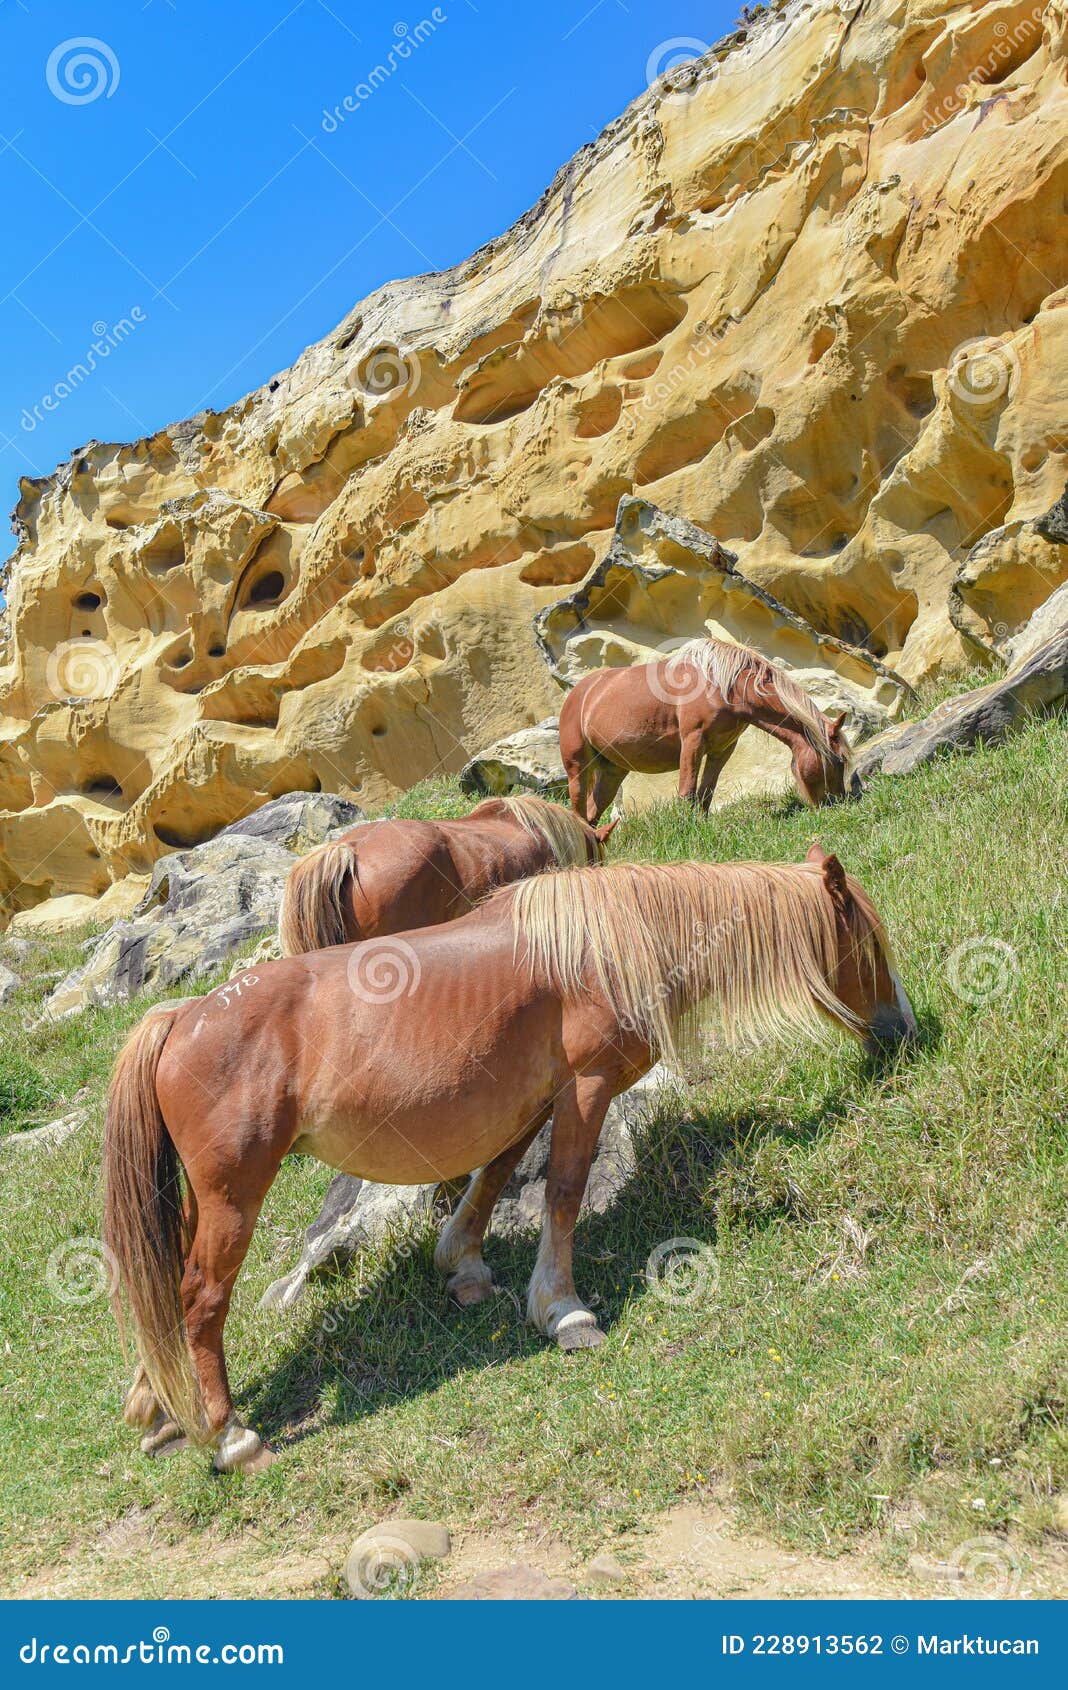 horses graze beneath colorful sandstone rock formations on the basque coast. mount jaizkibel, hondarribia, spain